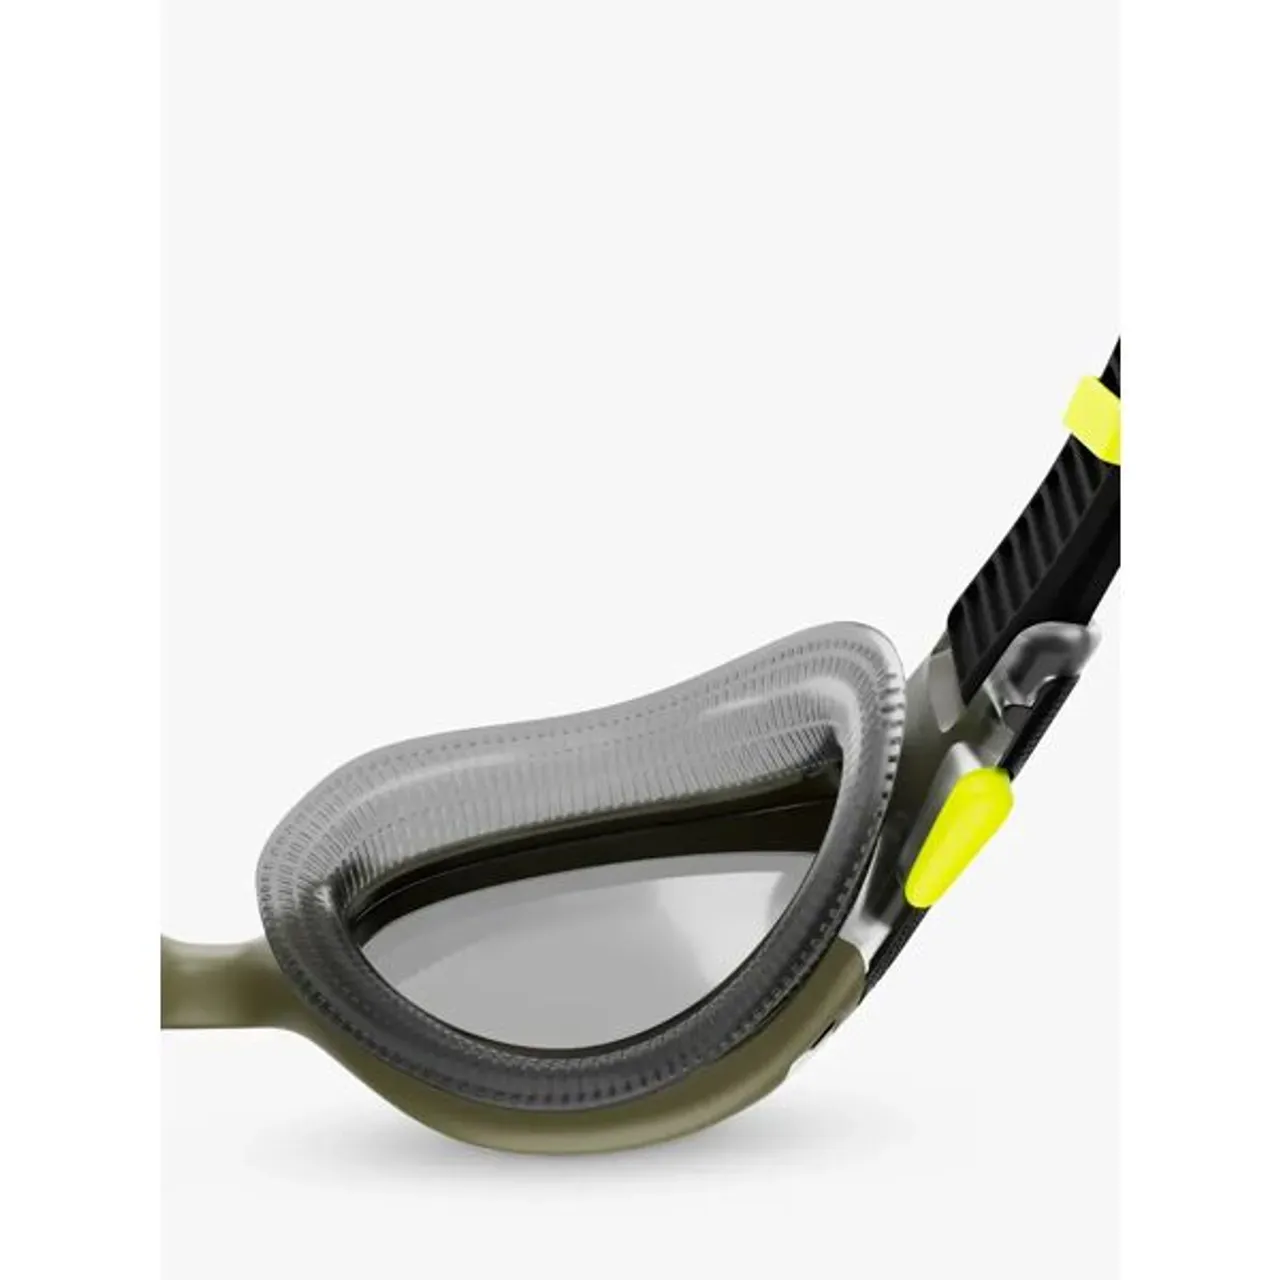 Speedo Biofuse 2.0 Polarised Swimming Goggles - Green/Hyper/Smoke - Unisex